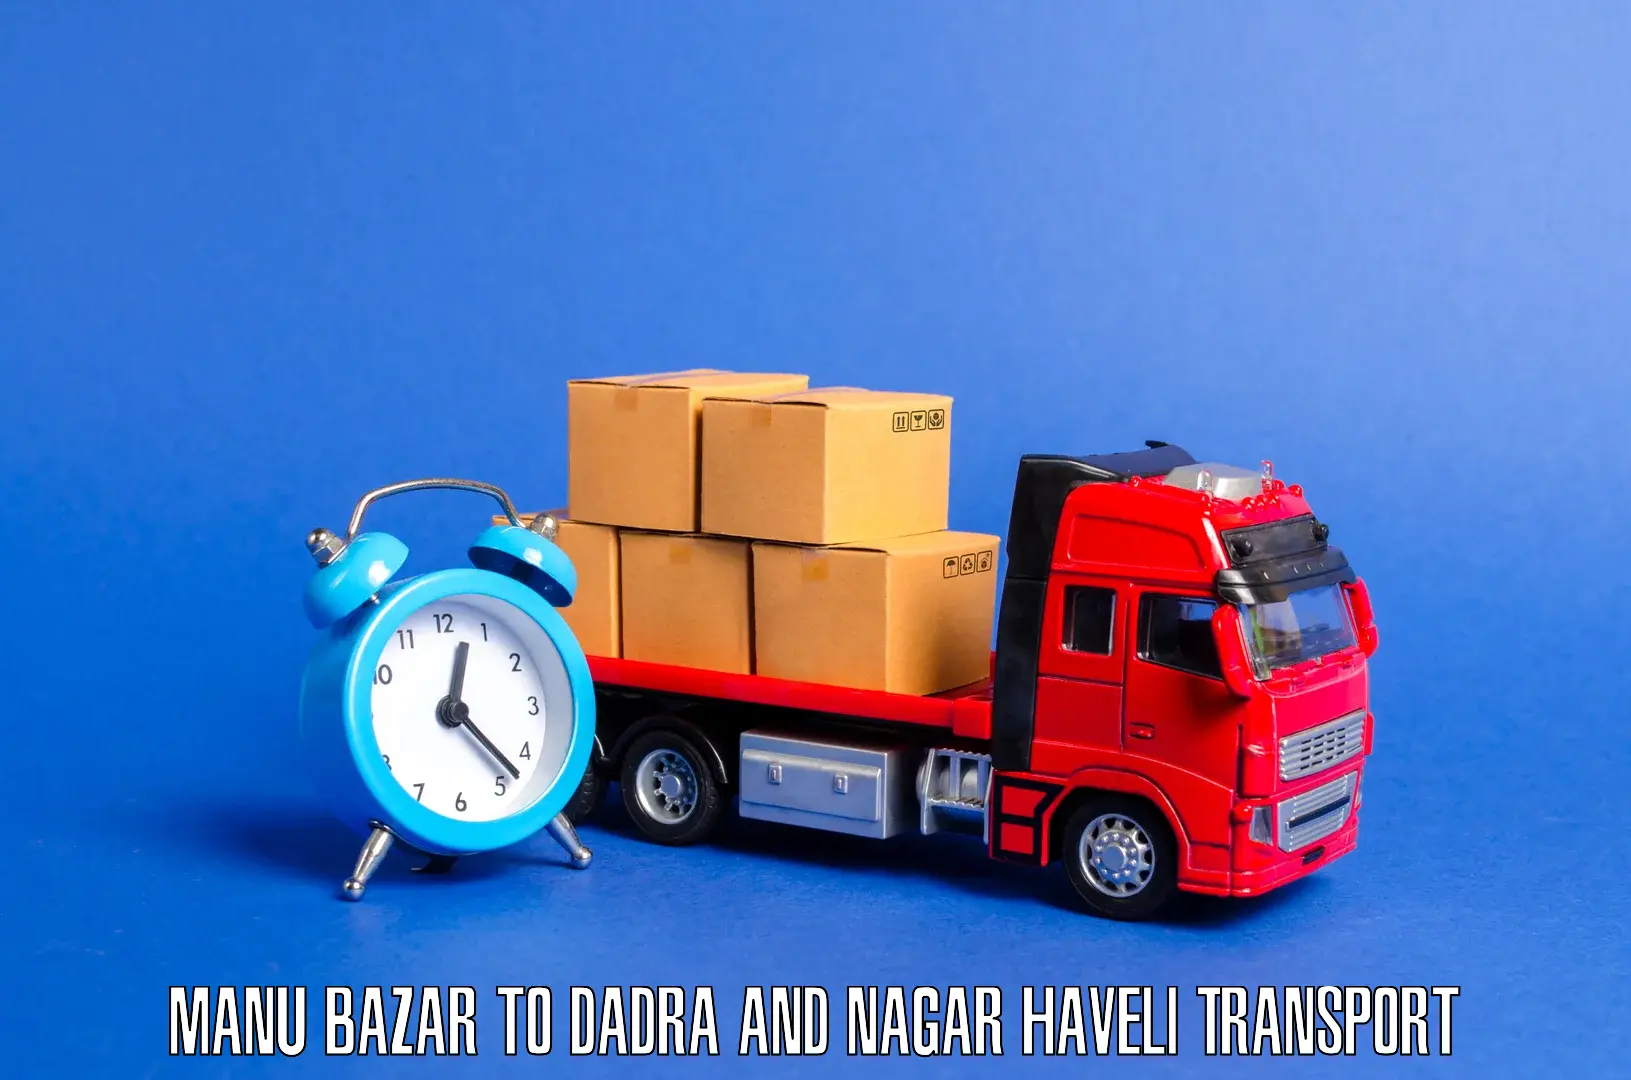 Truck transport companies in India Manu Bazar to Dadra and Nagar Haveli